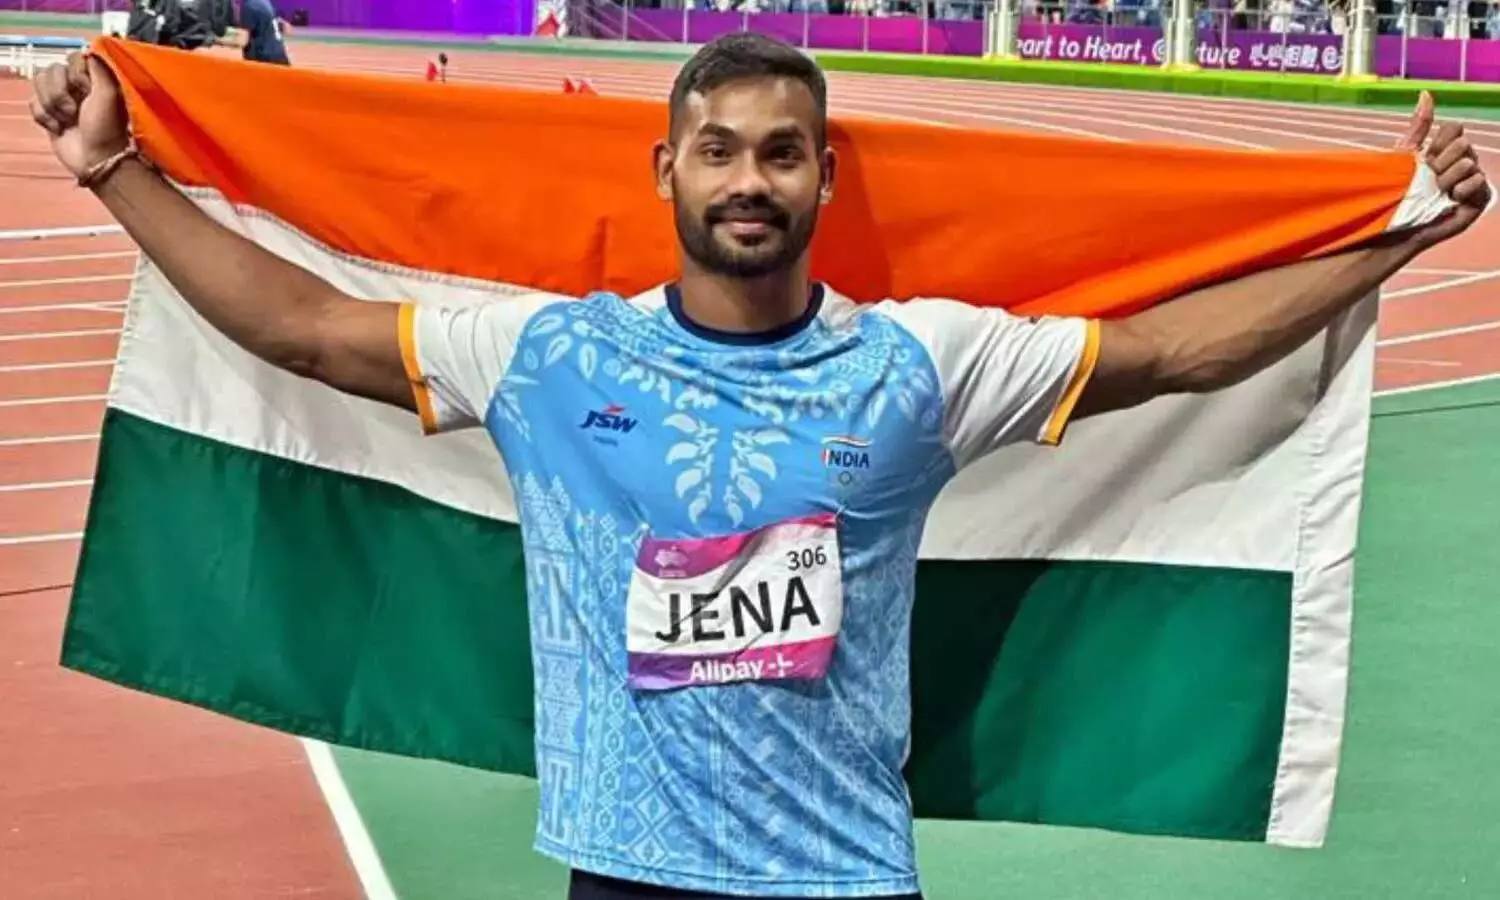 From practising javelin throws using bamboo sticks to winning silver at Asian Games, Odishas Kishore Kumar Jena has come a long way